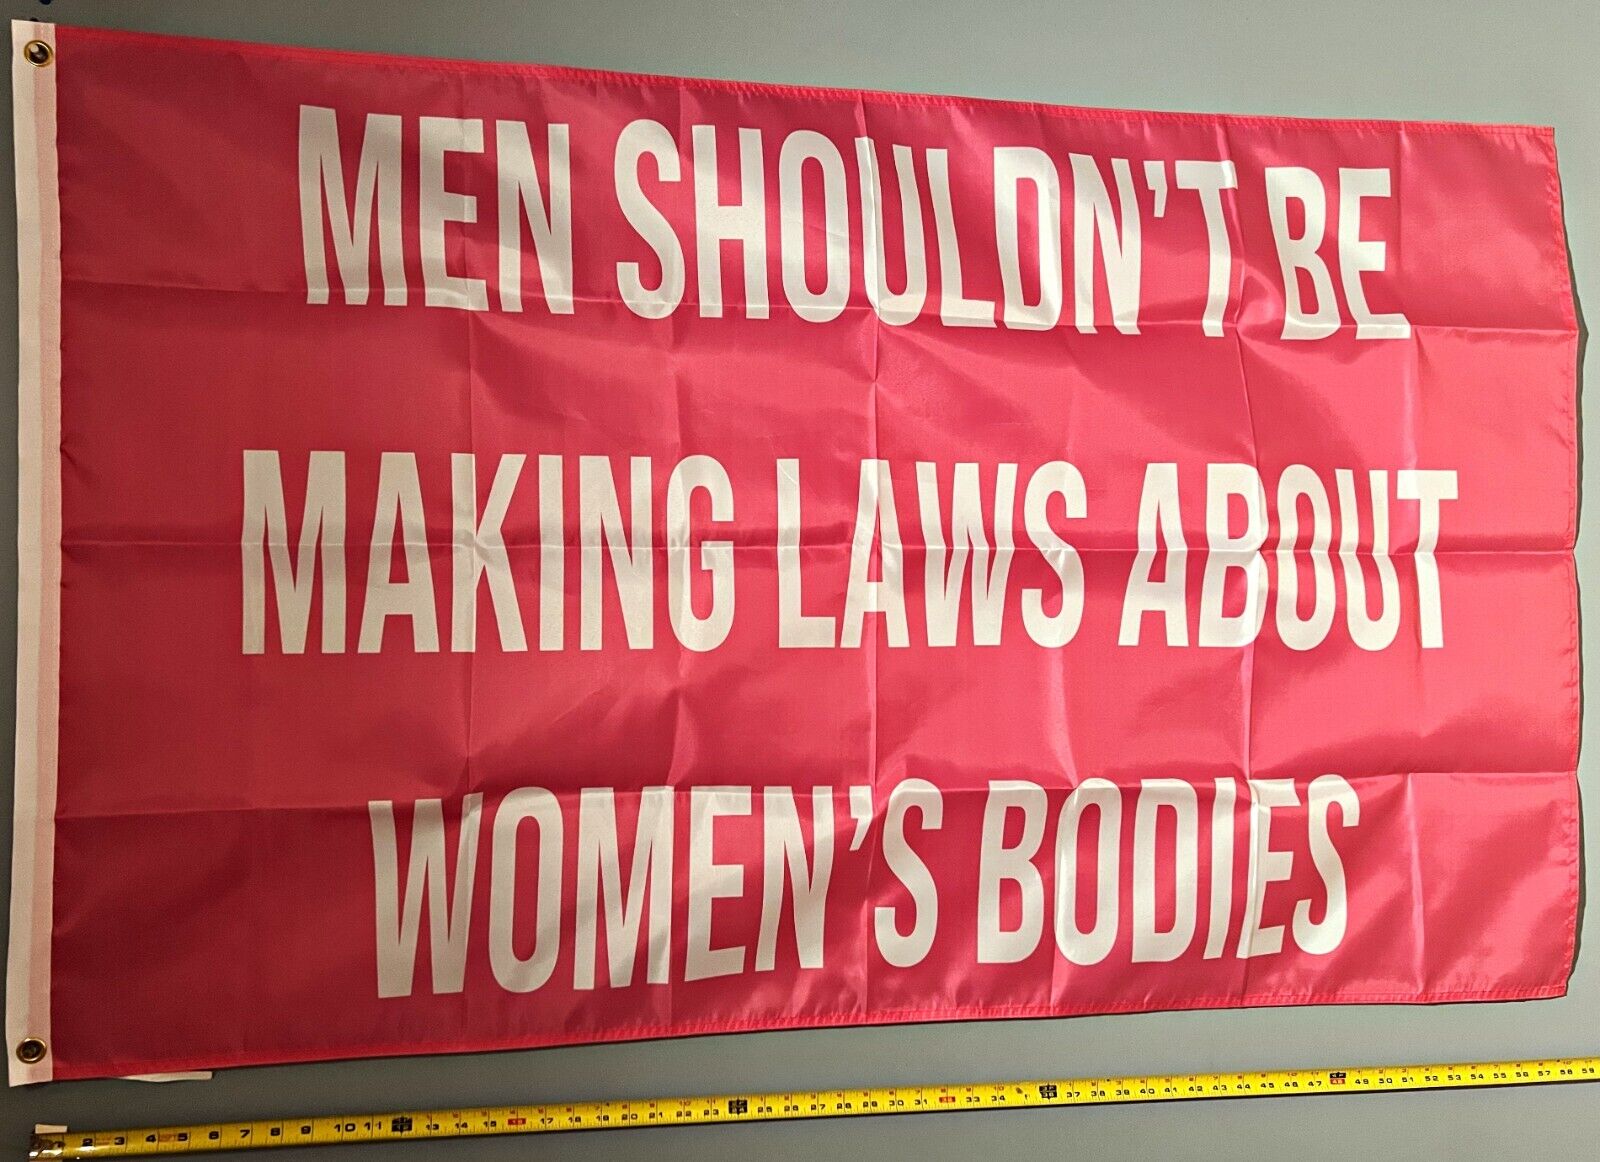 PRO WOMEN PRO CHOICE FLAG FREE USA SHIPPING Pro Life Men Shouldn't Pin Sign 3x5'